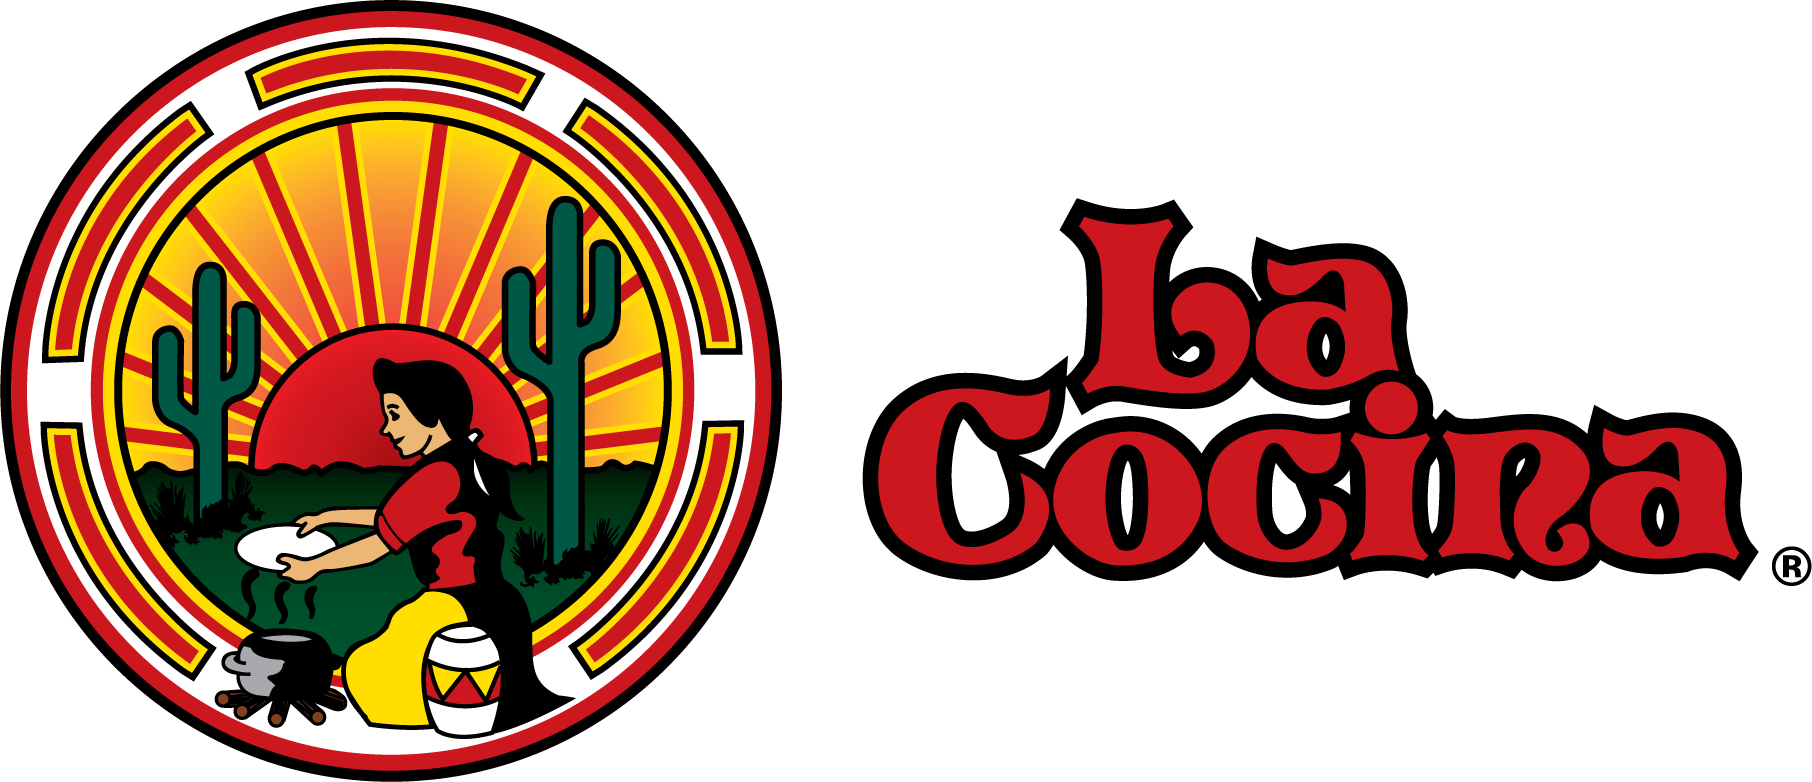 logos de chips tortilla